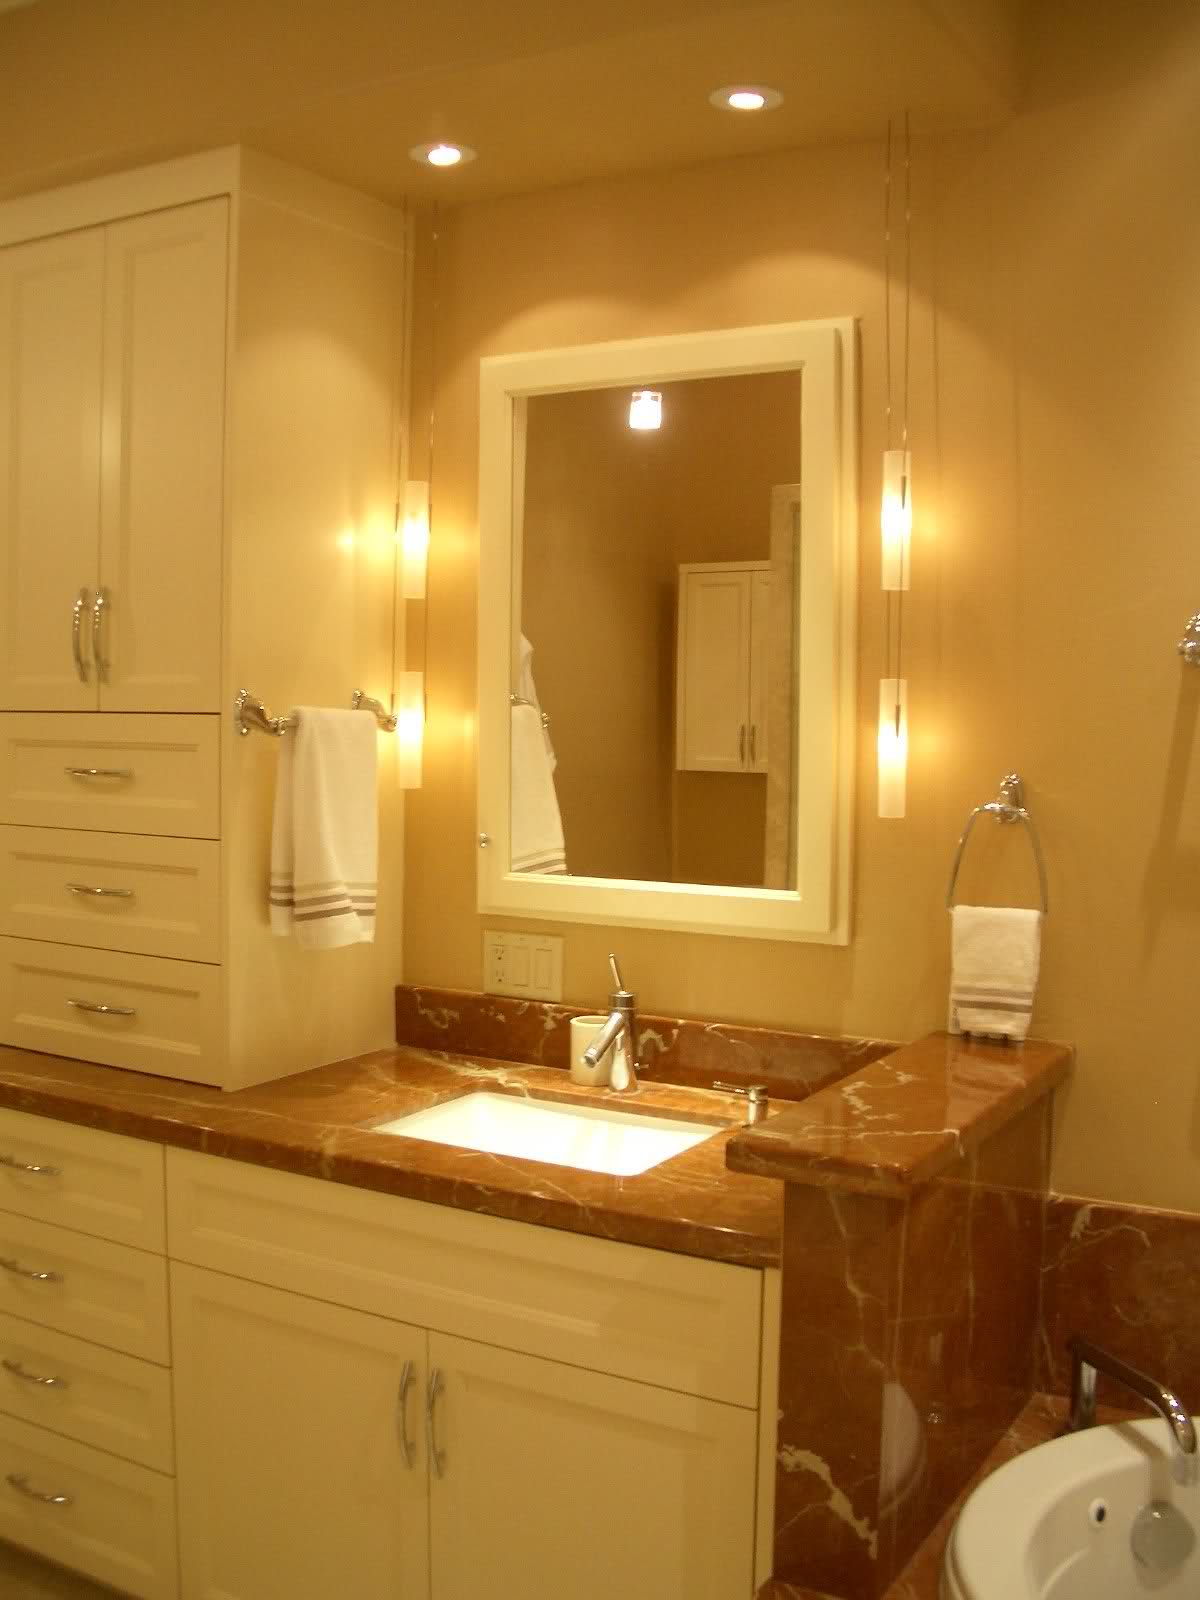 Bathroom Vanity In Traditional Bathroom Vanity Lighting Design In Small Shape Using White Wooden Vanity And Marble Countertop Ideas Bathroom Bathroom Vanity Lighting Covered In Maximum Aesthetic